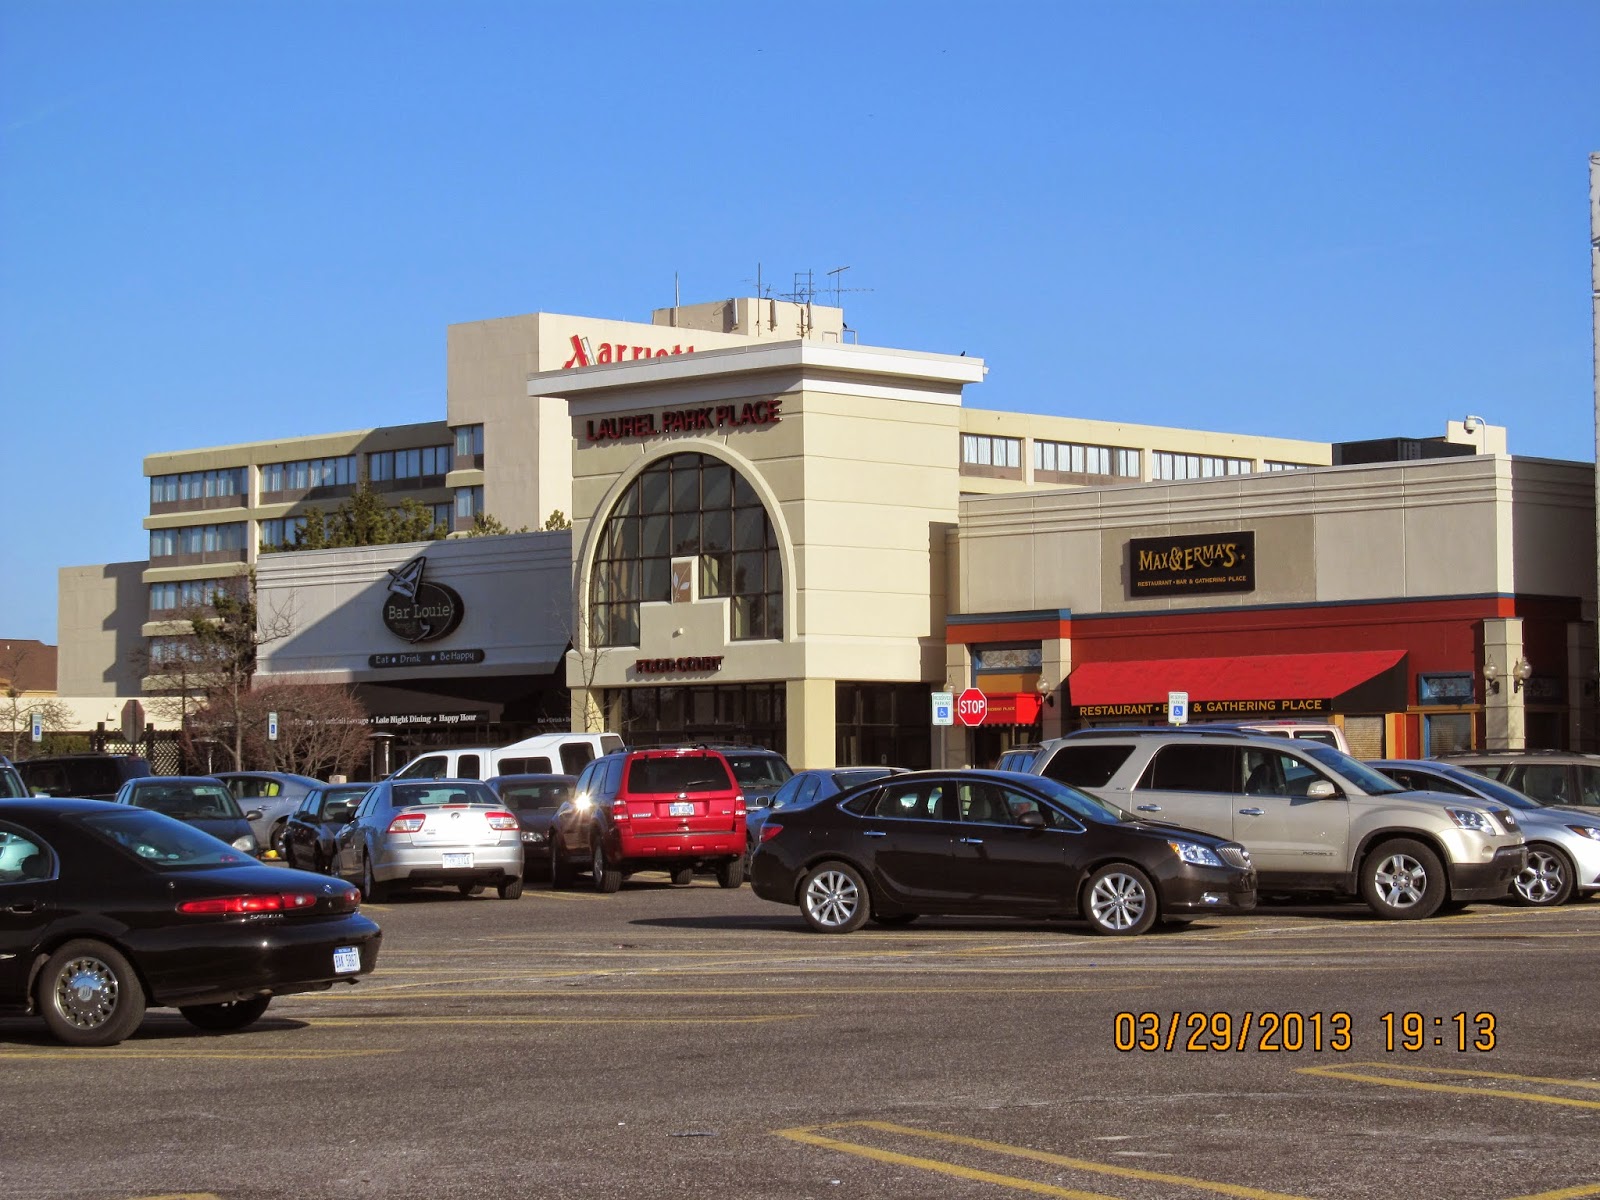 Mall Directory  Laurel Park Place